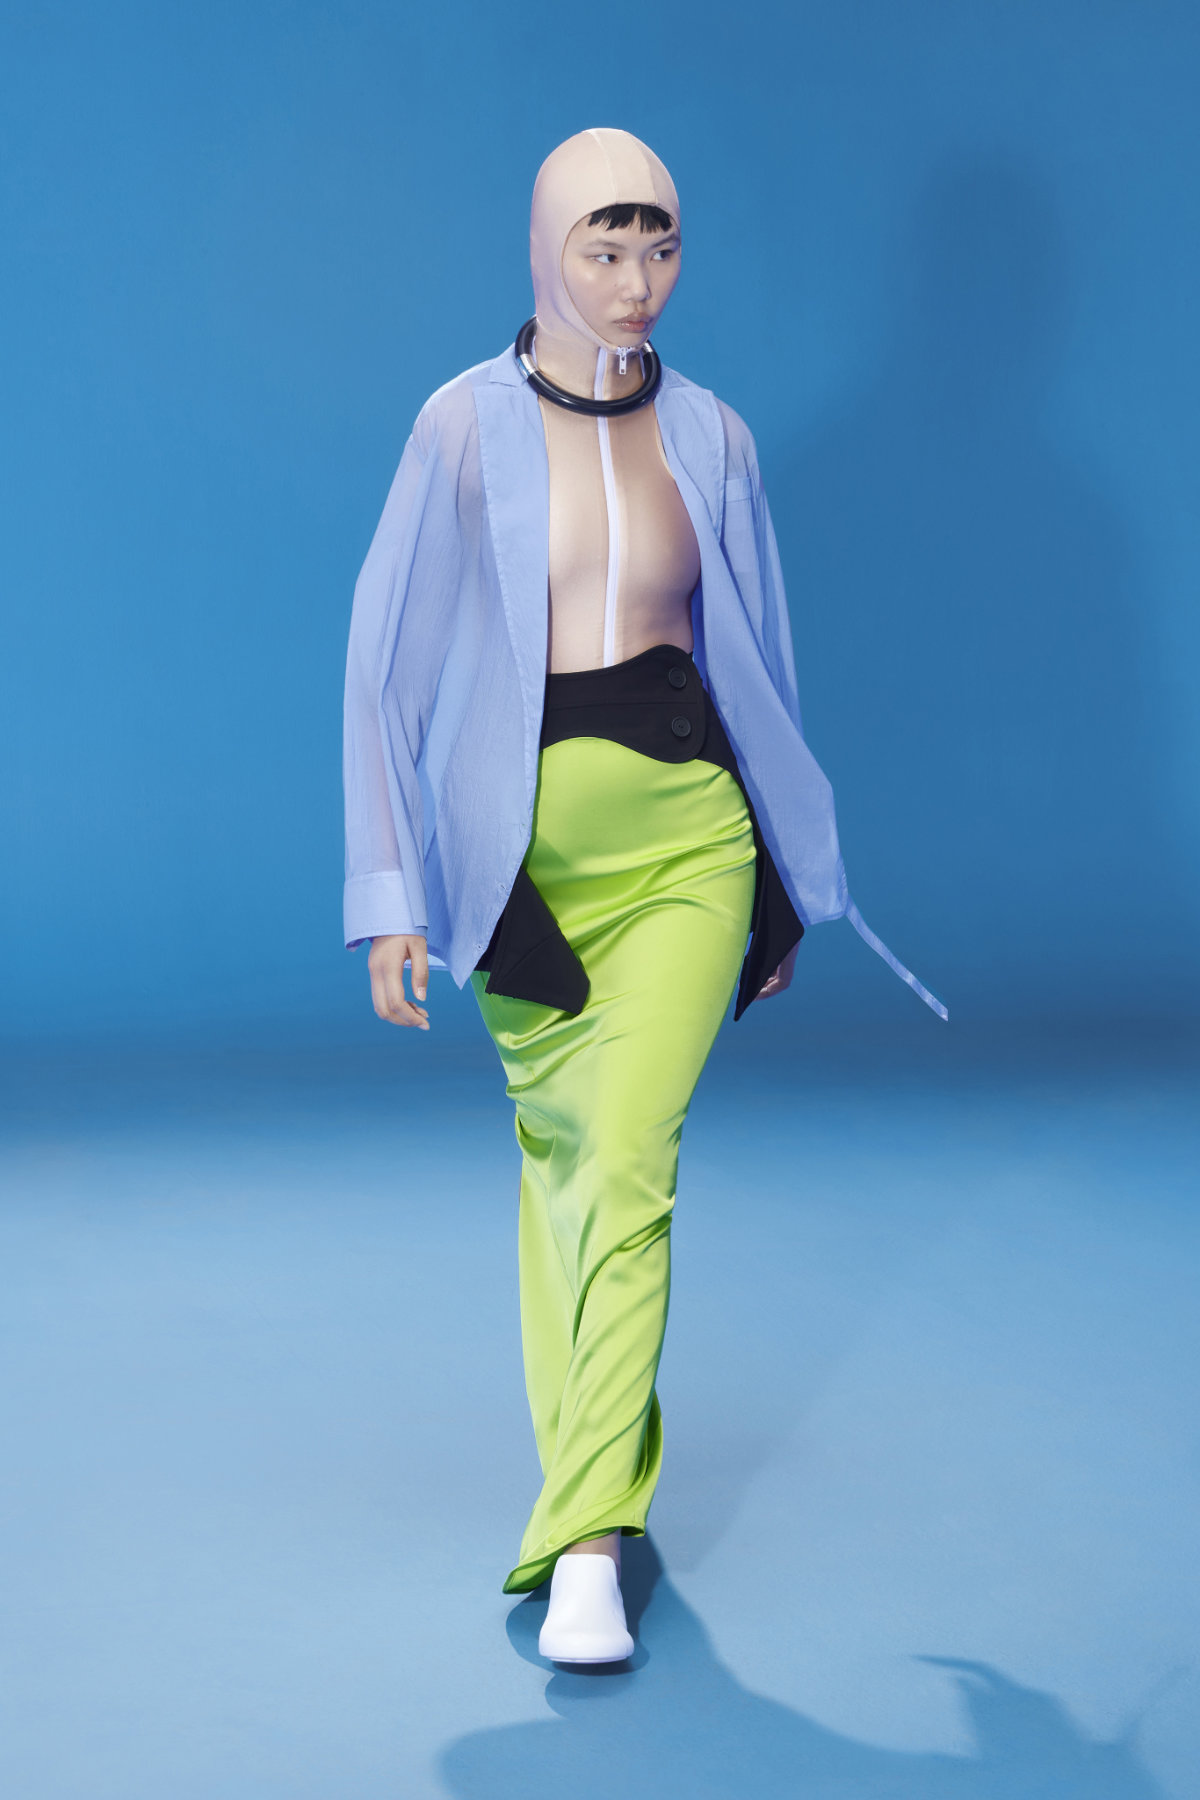 Nina Ricci Presents Its New Spring-Summer 2022 Collection